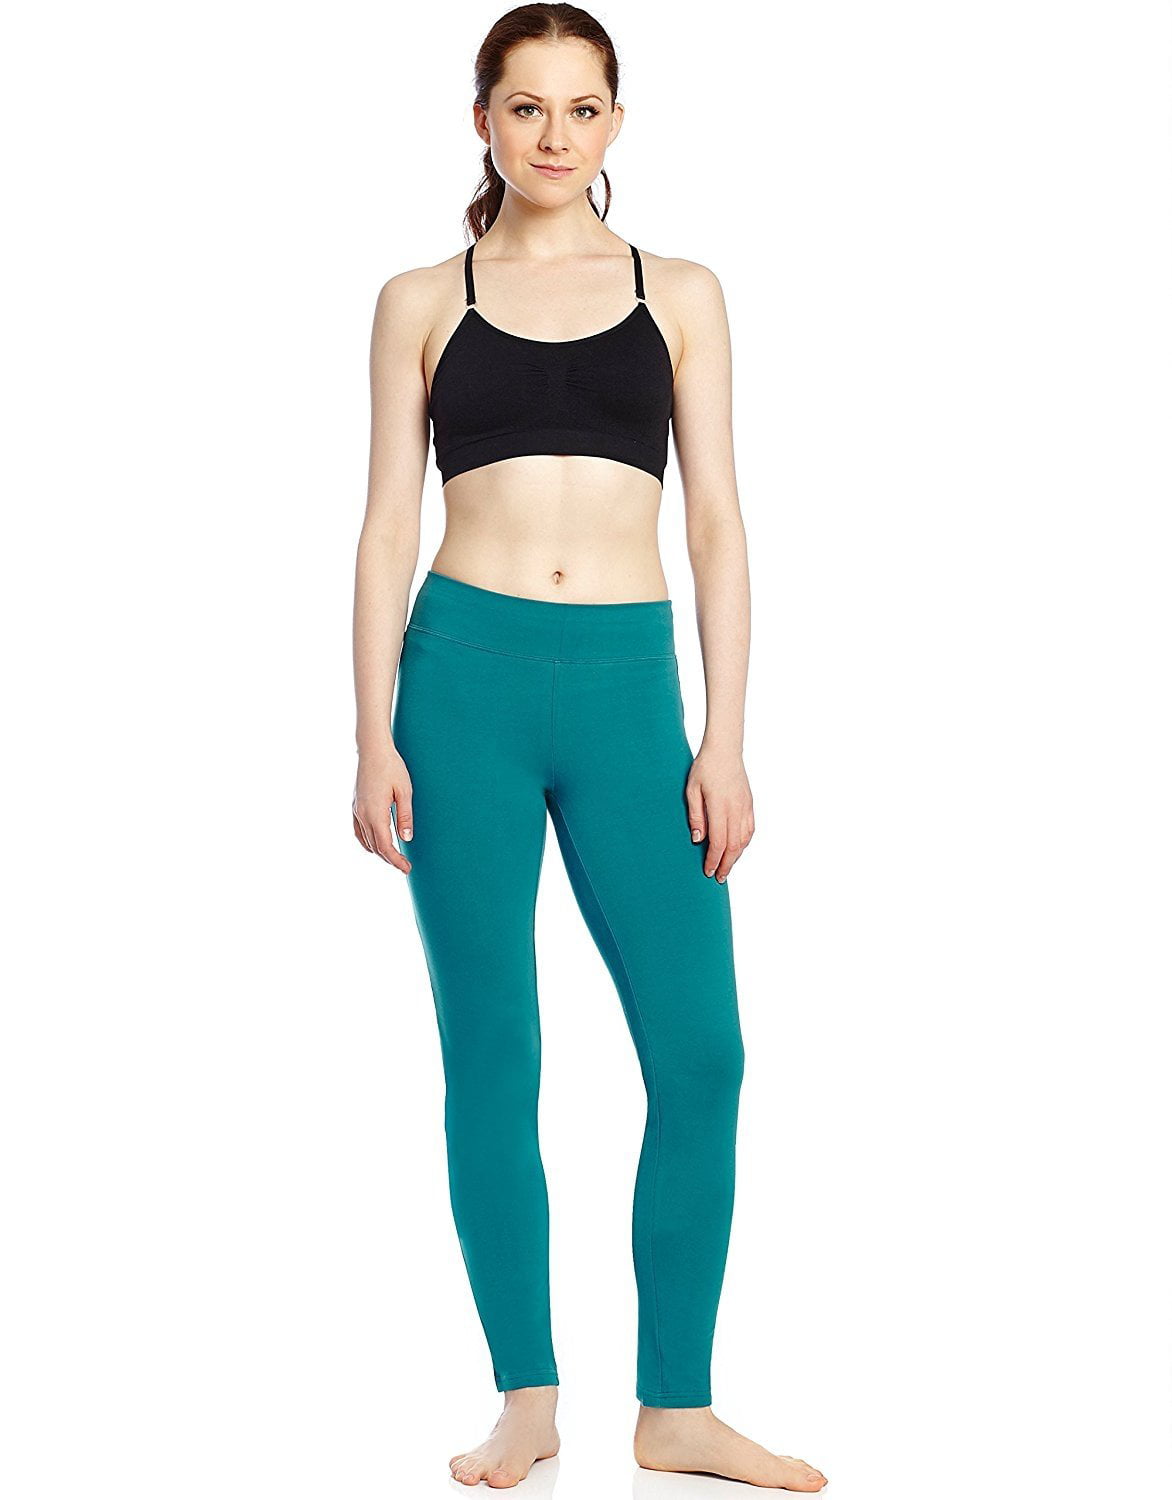 Leveret Women's Charcoal Capri Yoga Legging Pants Size XS-XL 